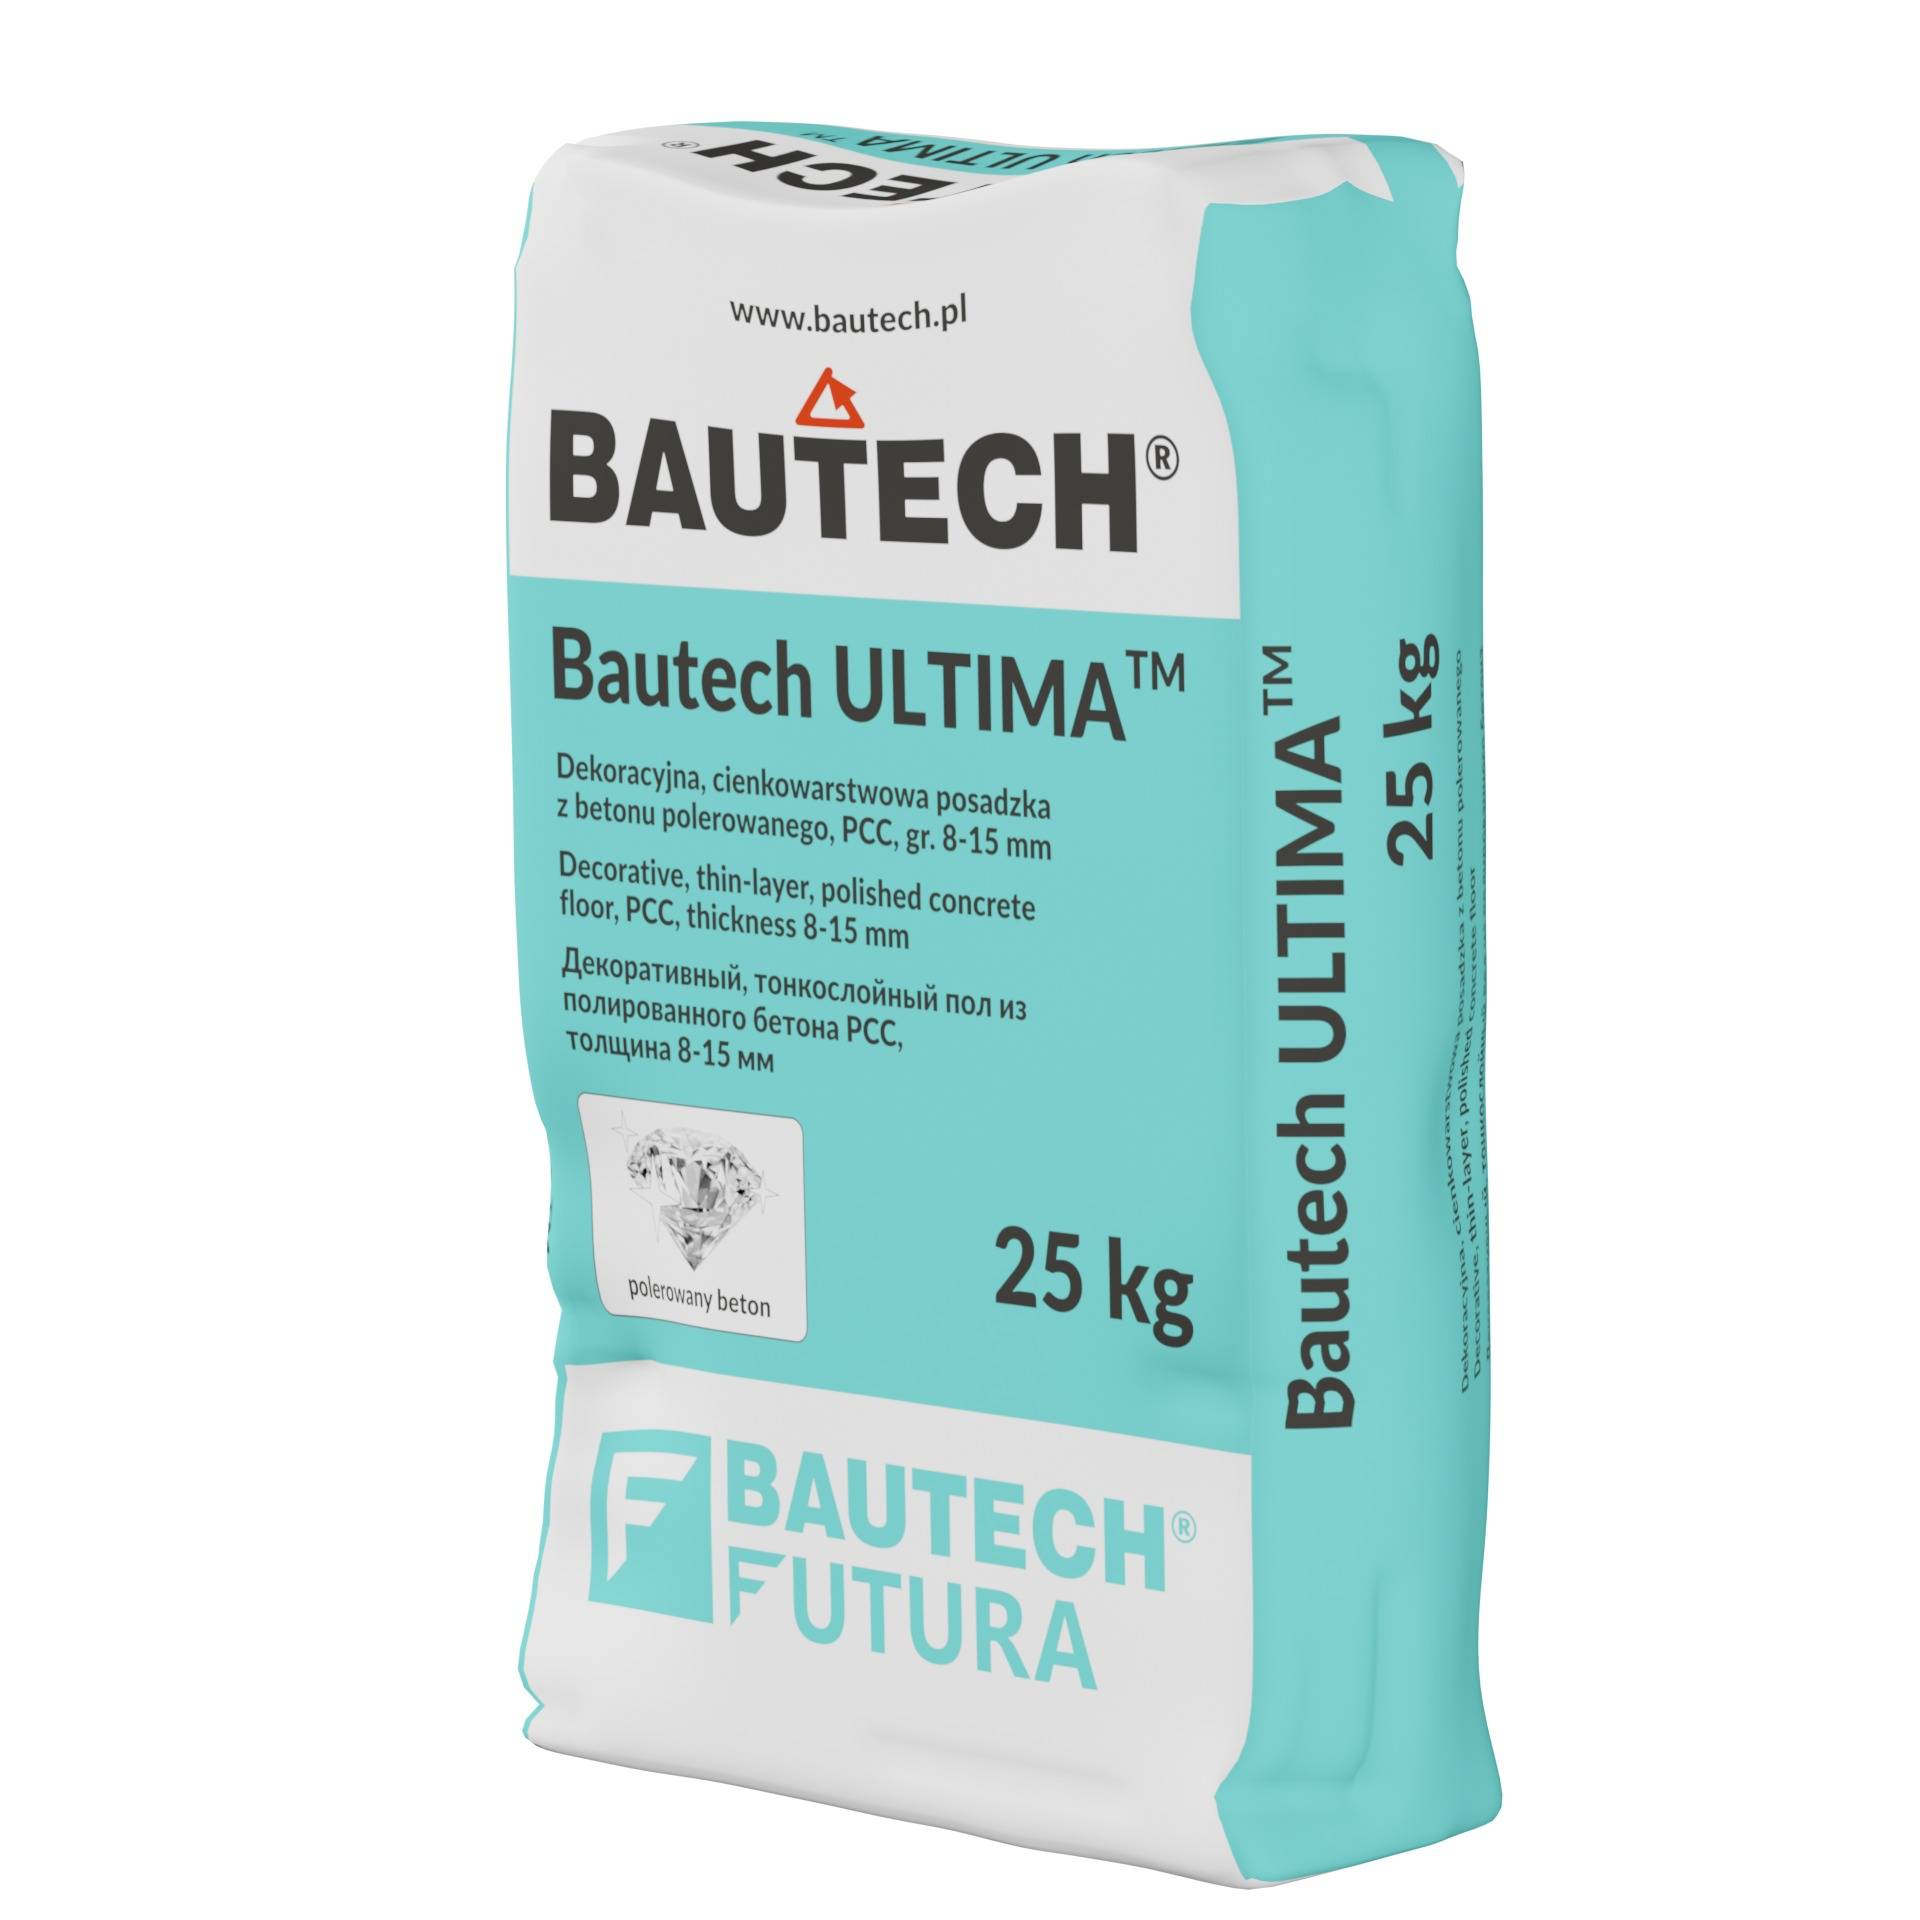 Bautech ULTIMA_2020-09-23_visual_11_11zon